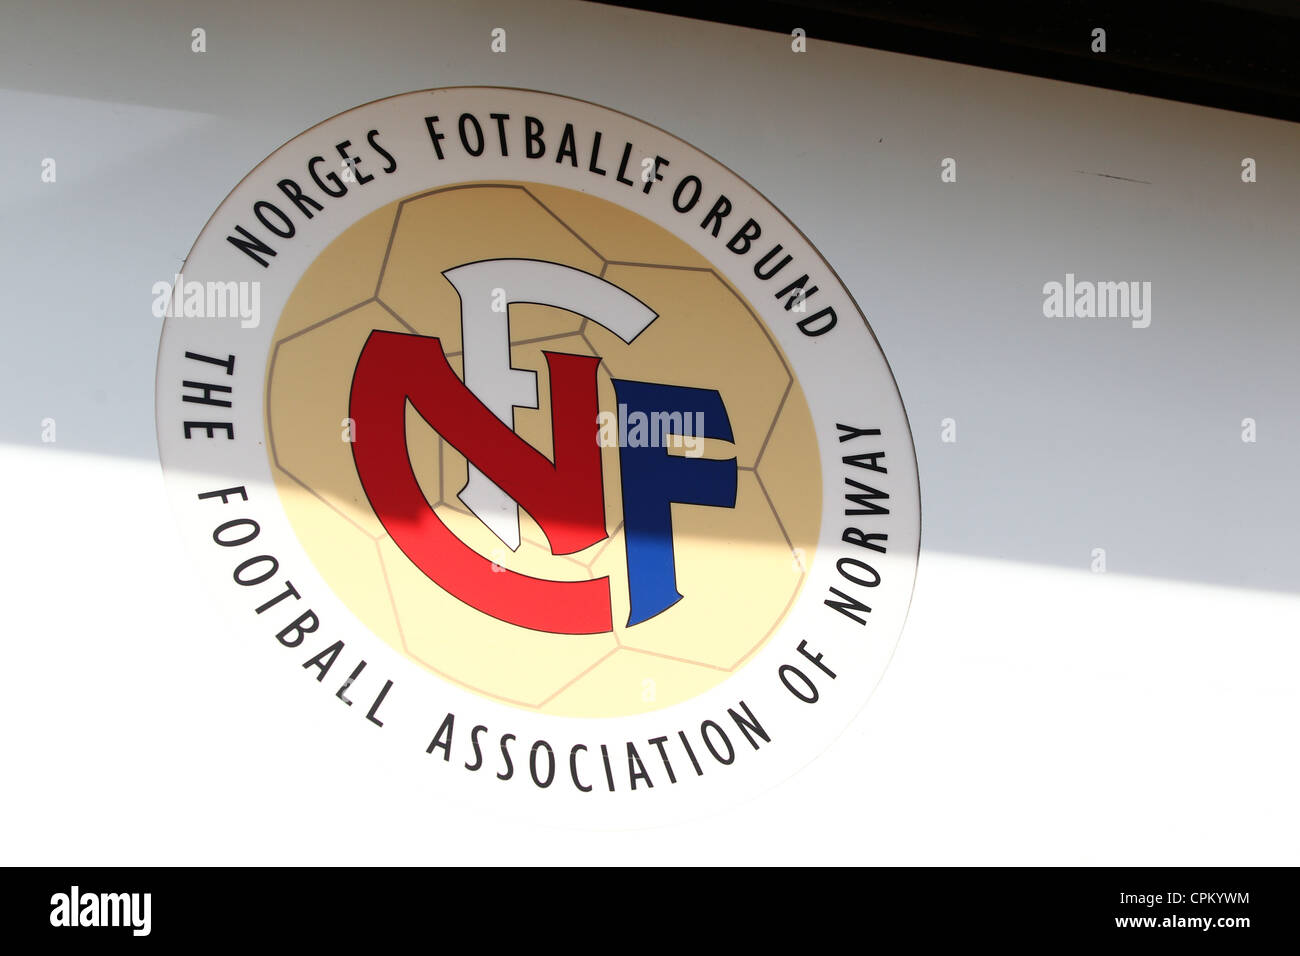 La Norges Fotballforbund - l'Association de football de la Norvège au stade Ullevaal Banque D'Images